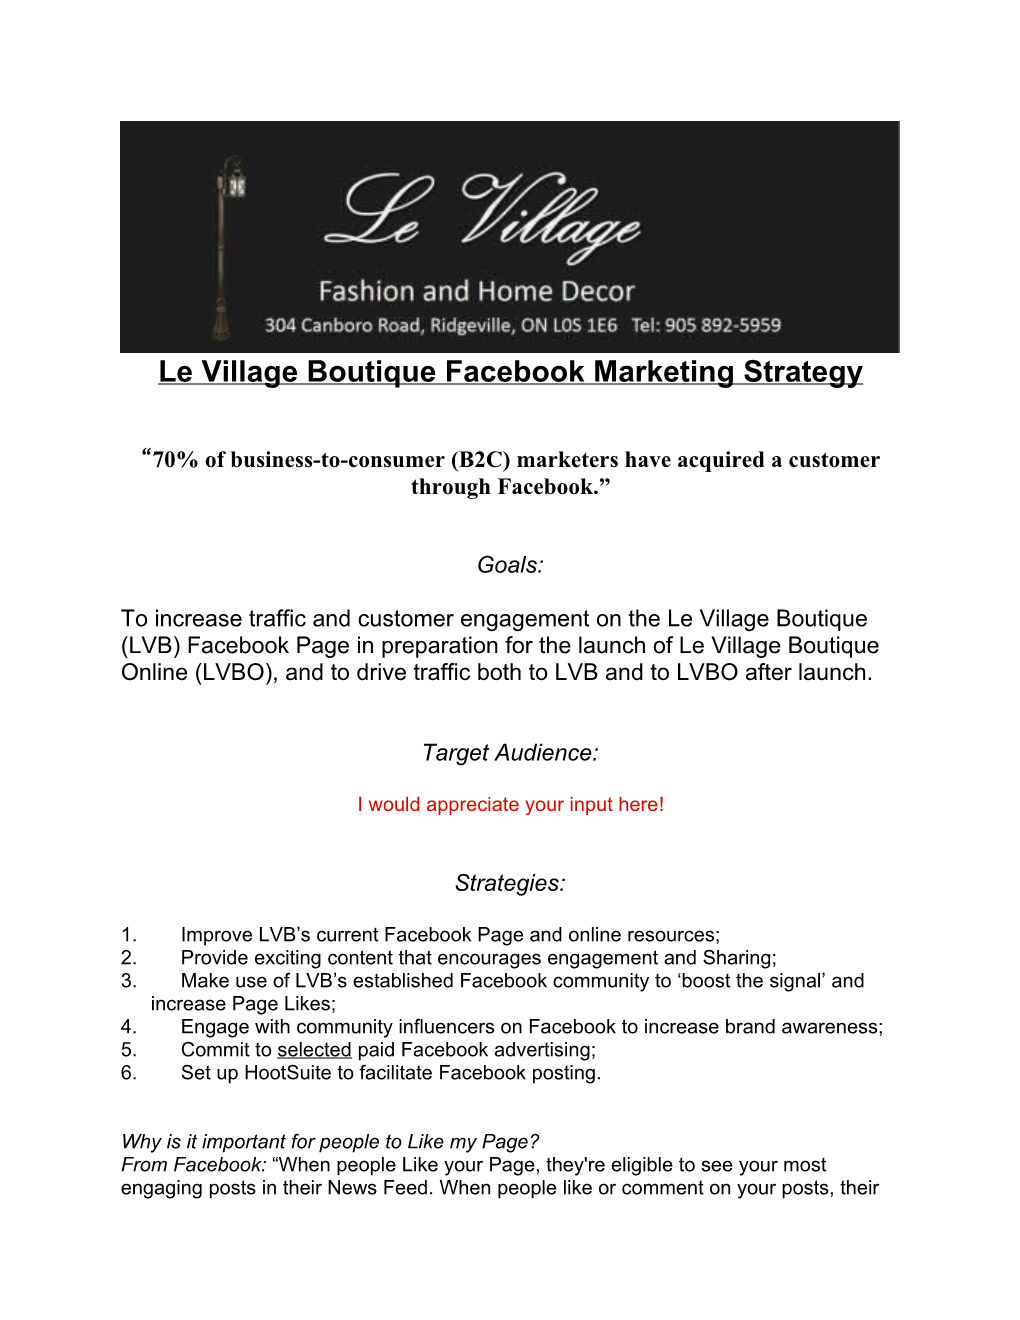 Le Village Boutique Facebook Marketing Strategy